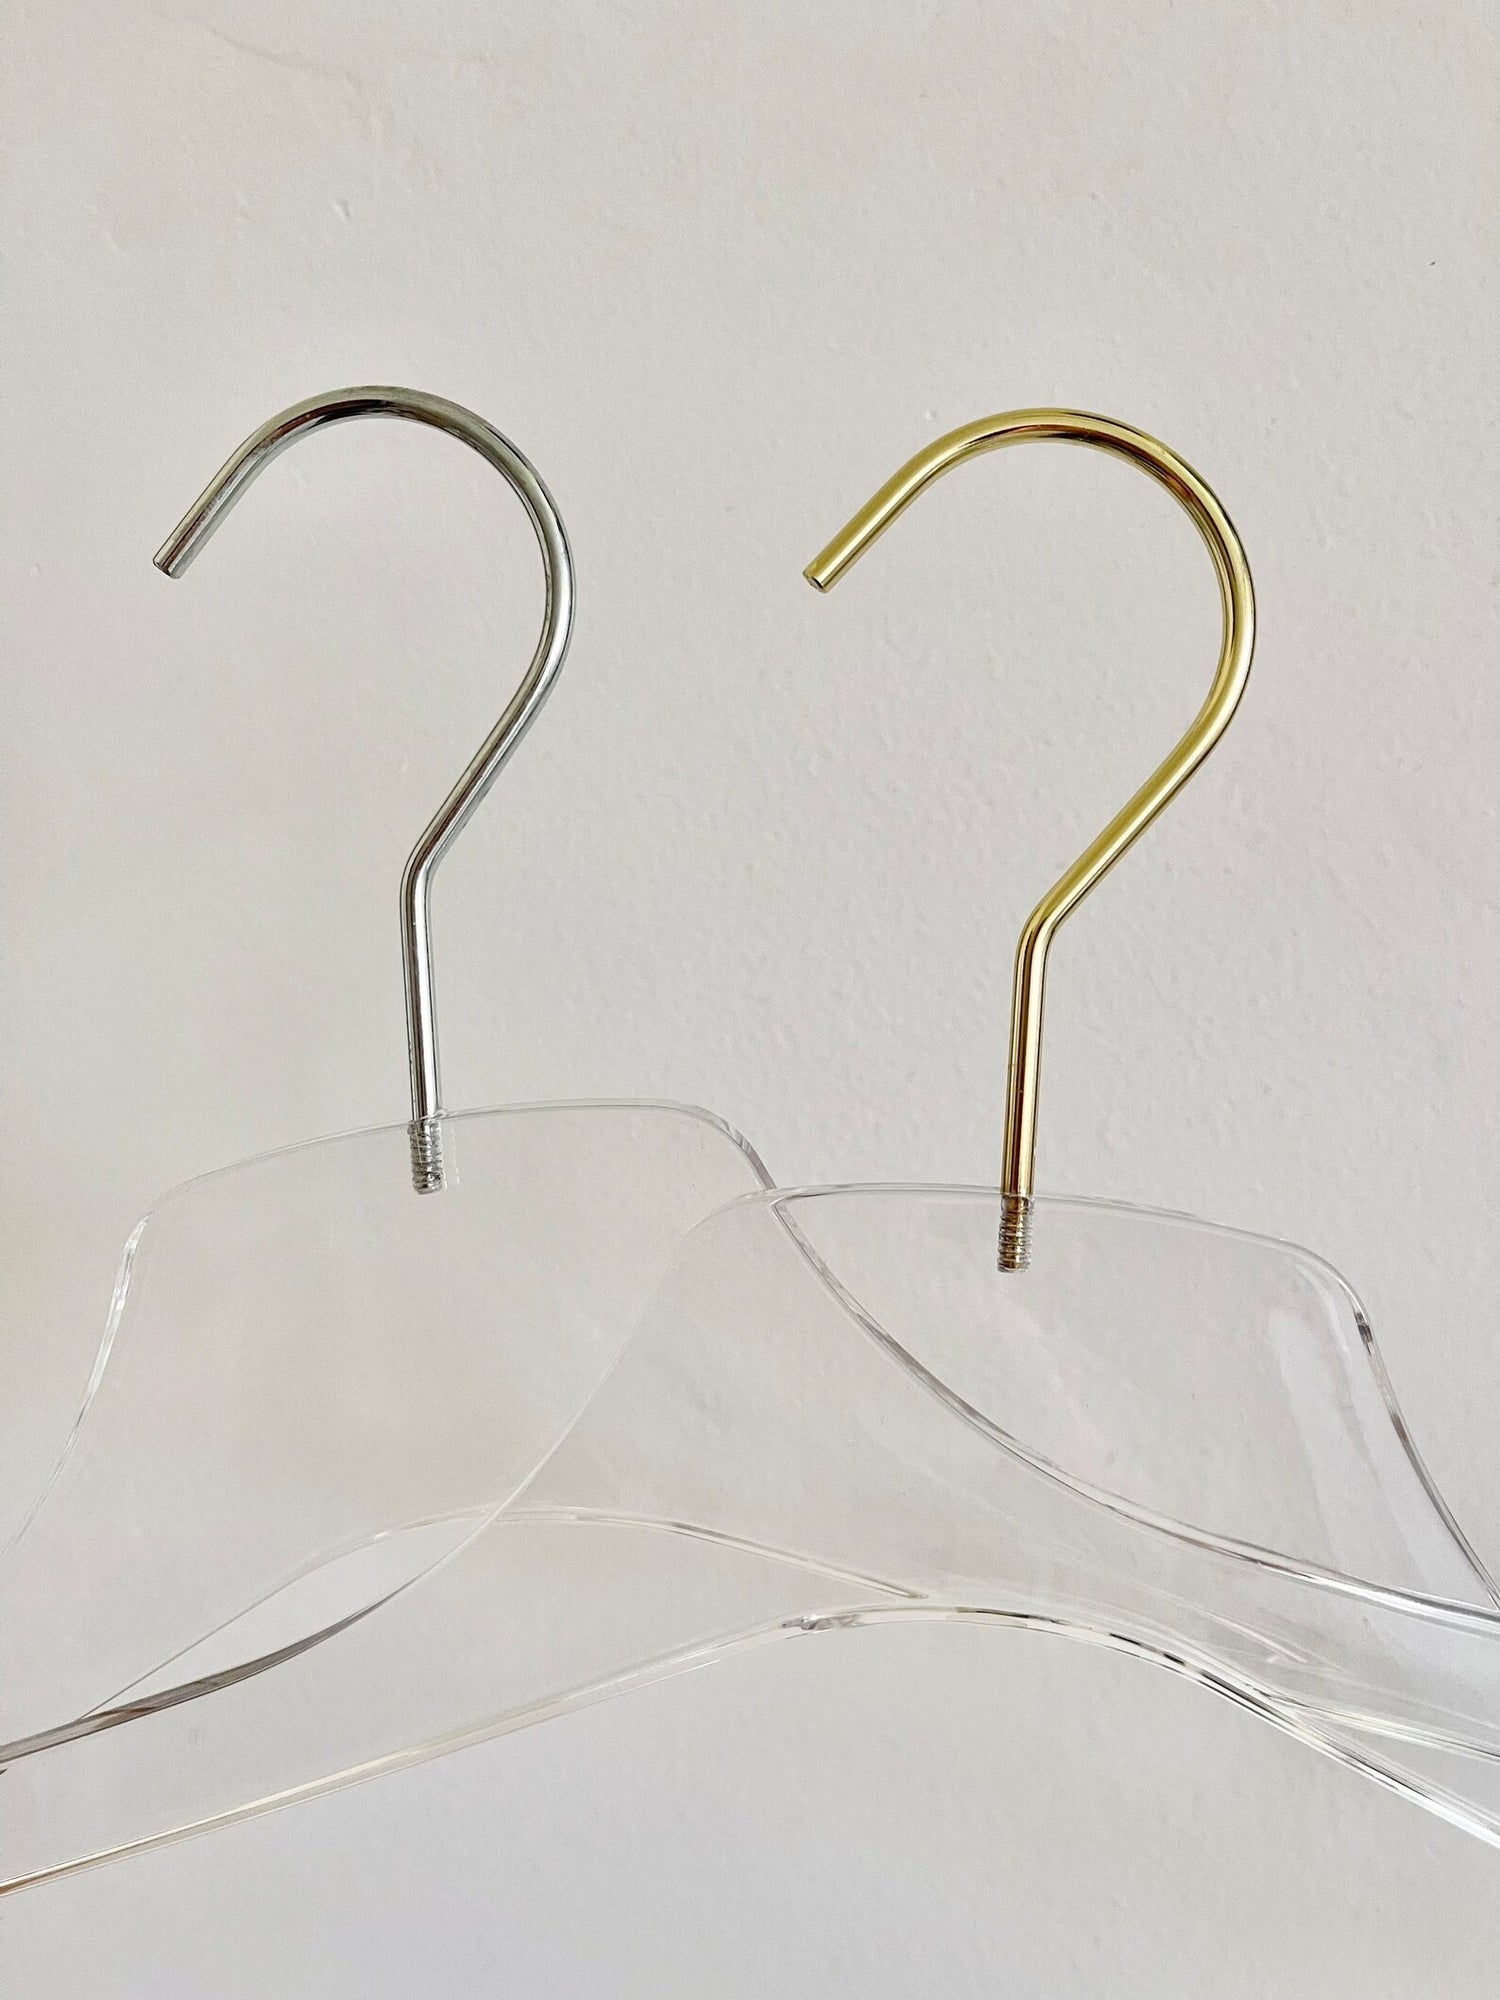 Personalized Wedding Hangers made with Cricut Explore Air - Coastal Kelder